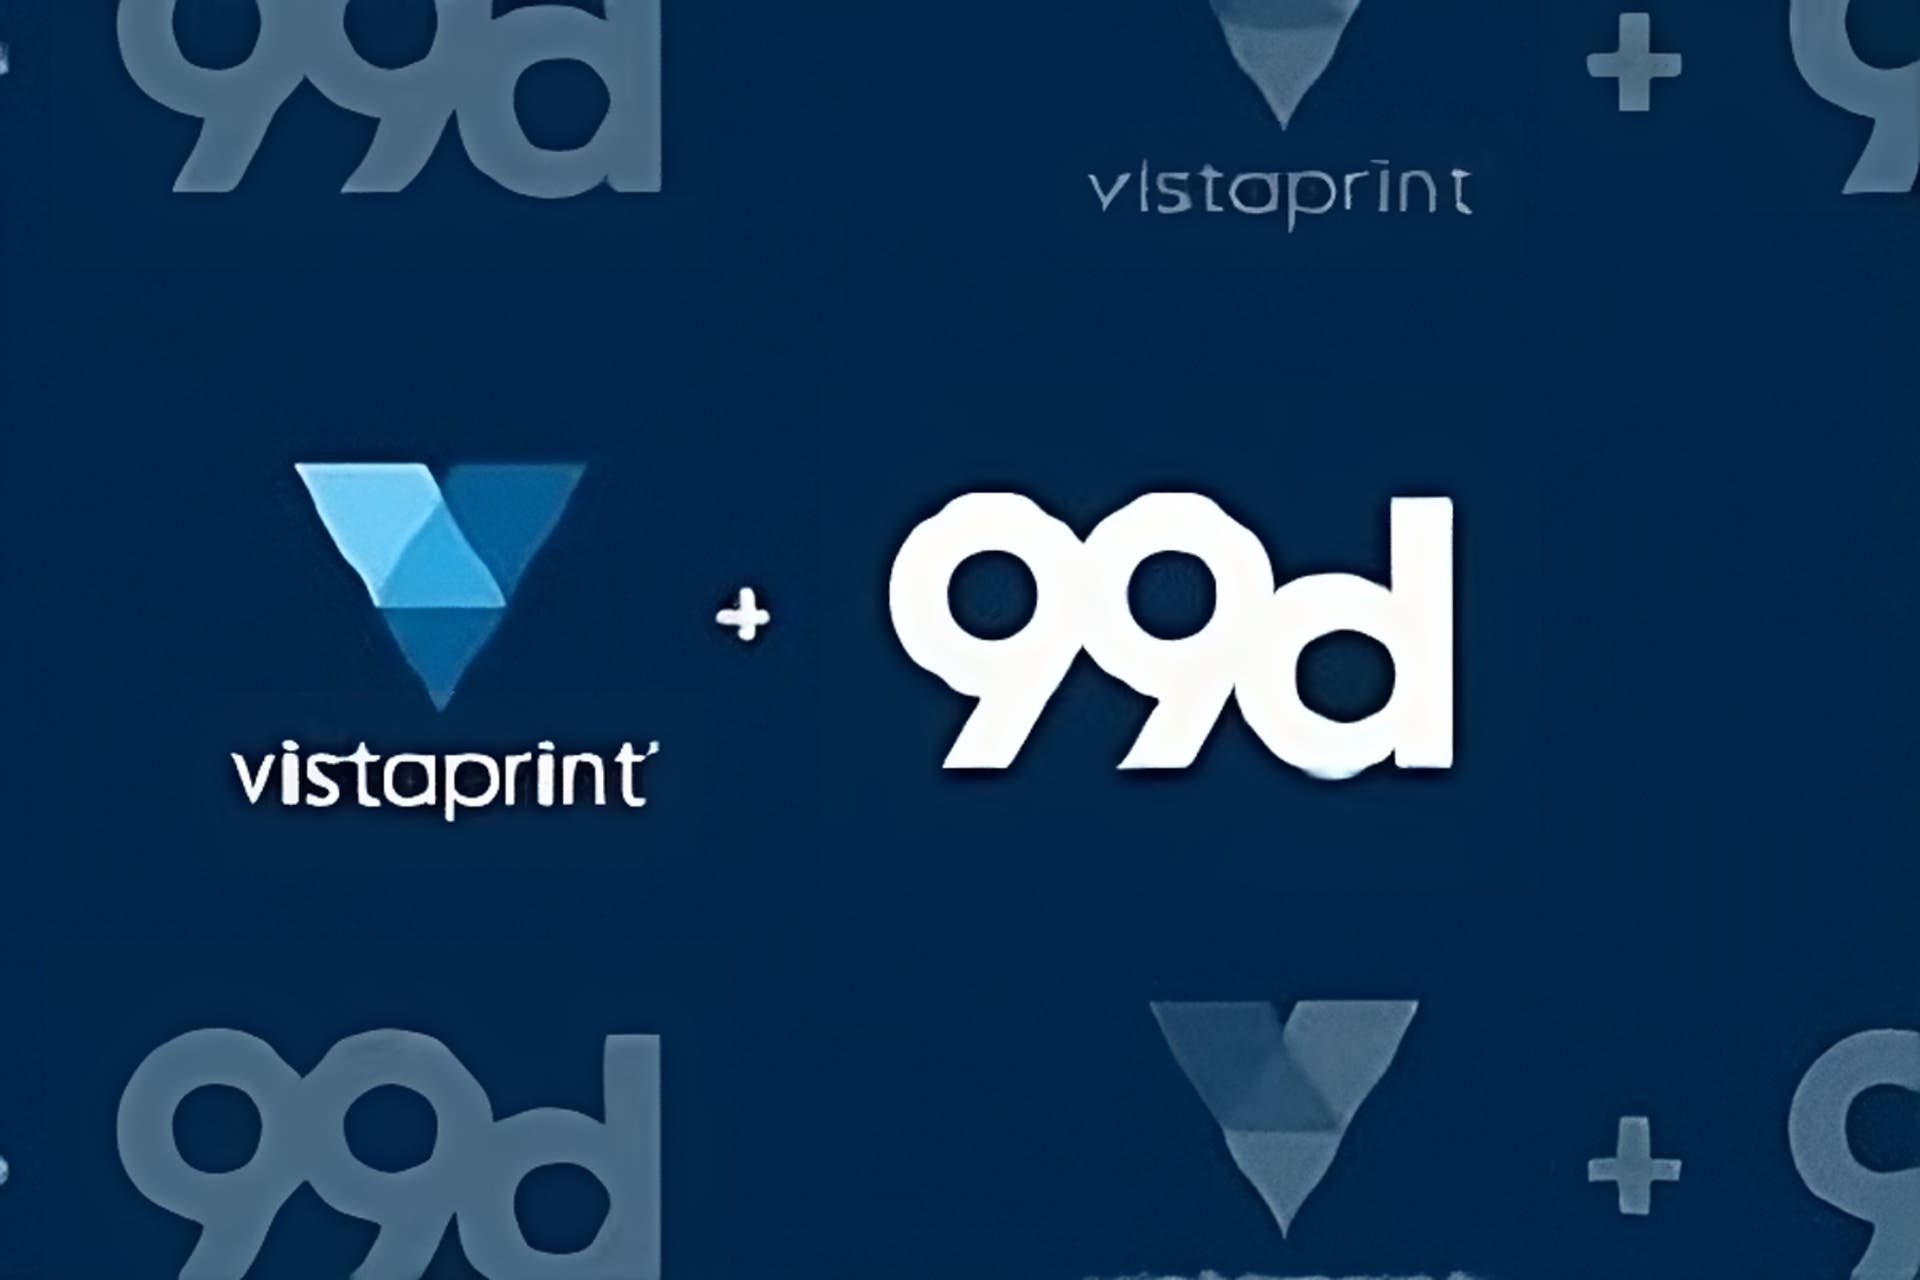  99 designs at Vistaprint logo 